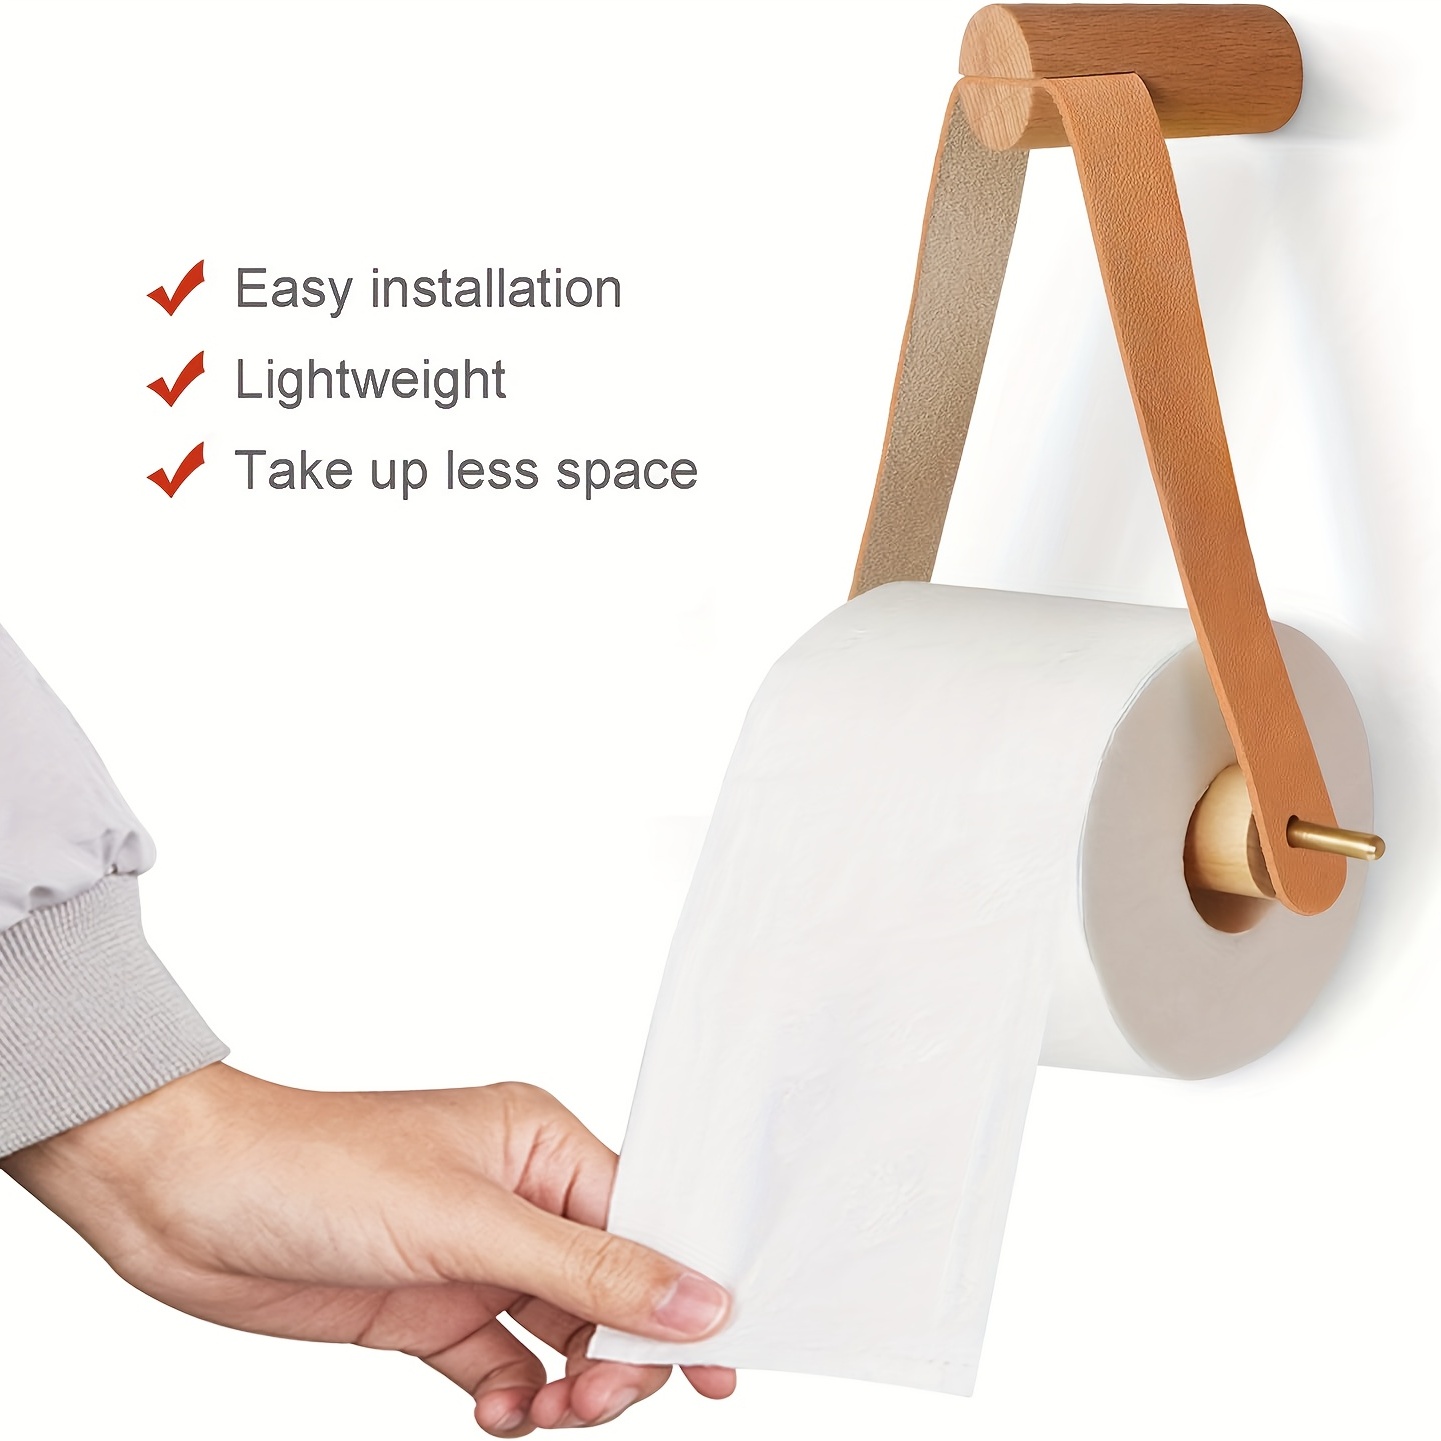 Paper Towel Holder, Counter Paper Towel Holder, Kitchen Decor, Copper Paper  Towel Holder, Kitchen And Dining